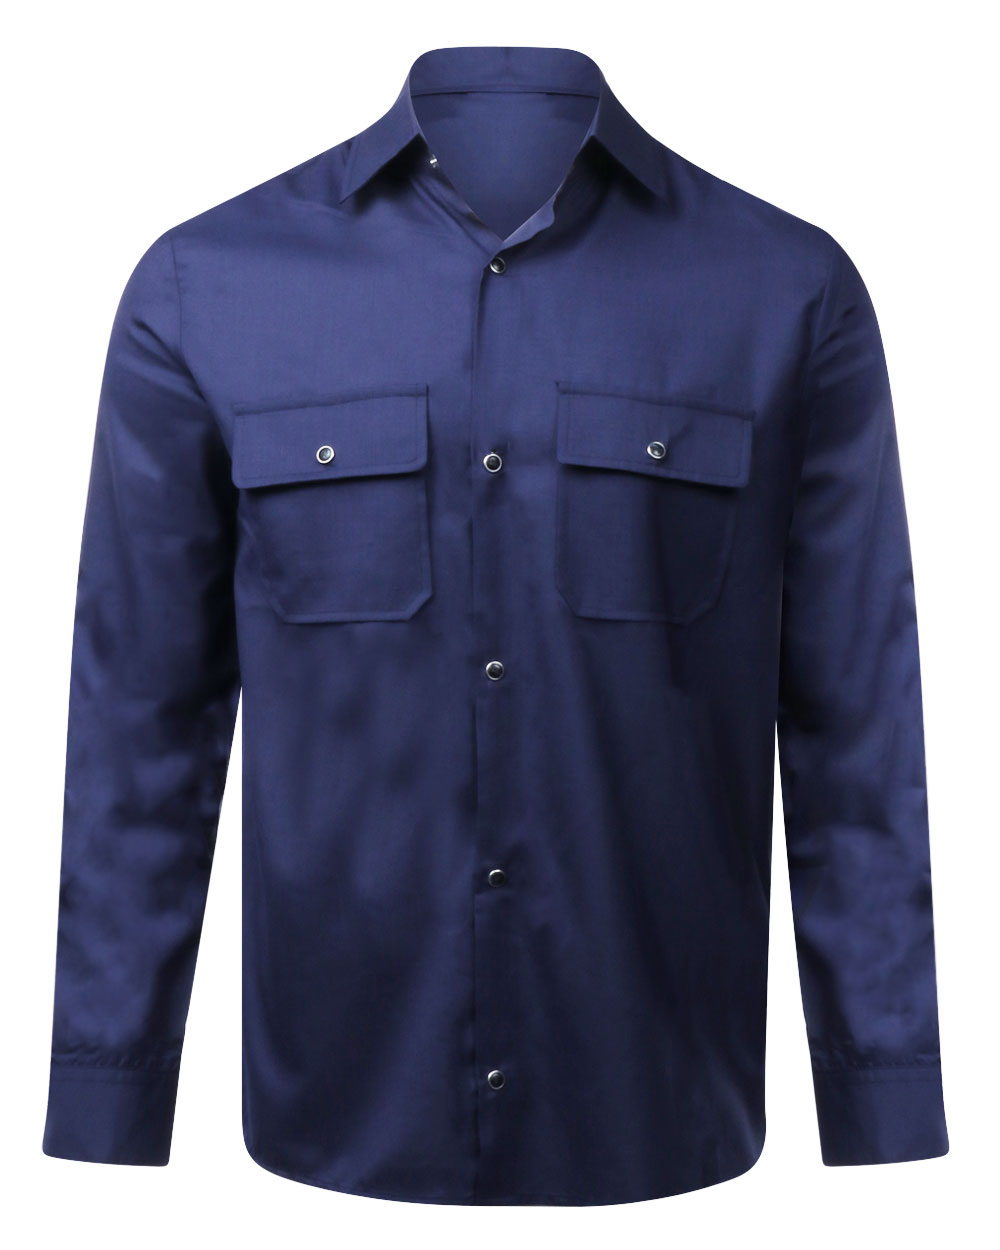 Navy Blue Overshirt